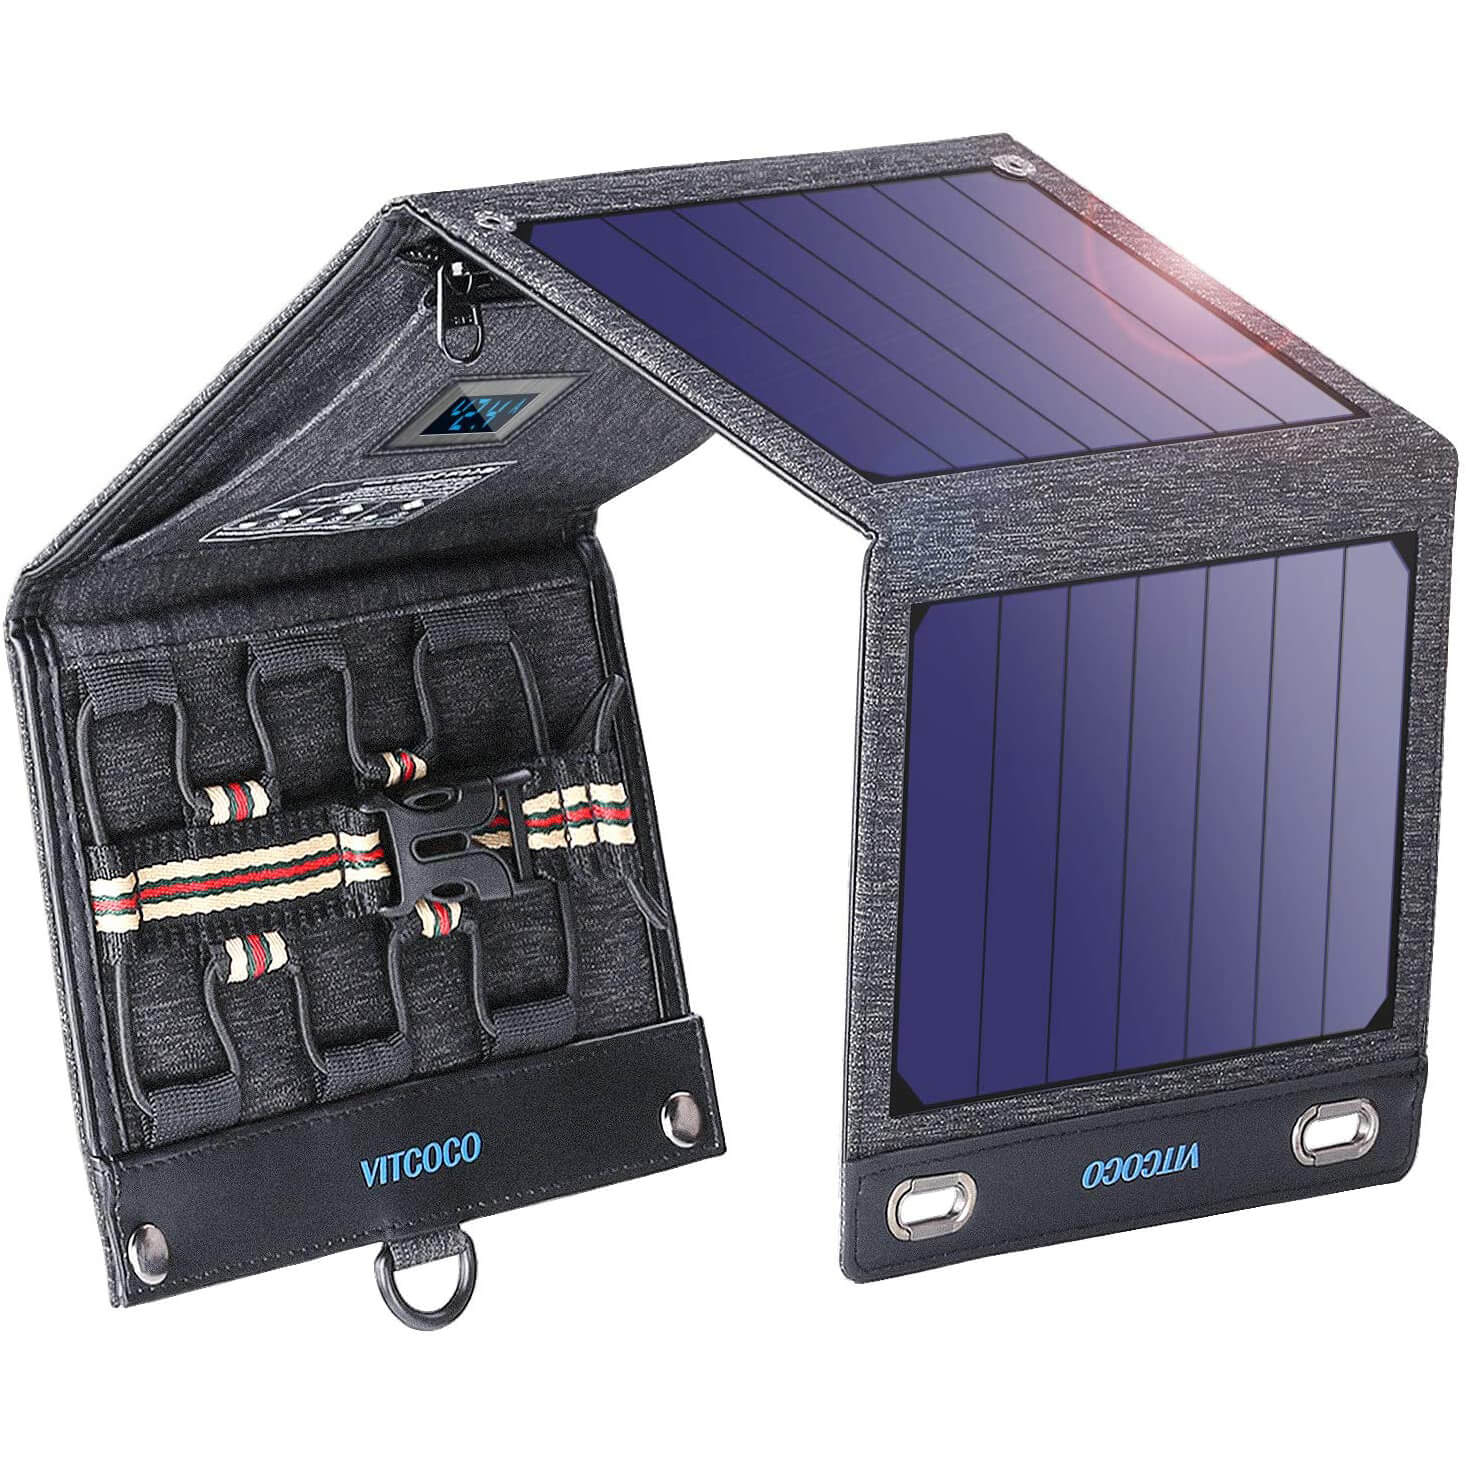 VITCOCO 16W Foldable Solar Power Bank